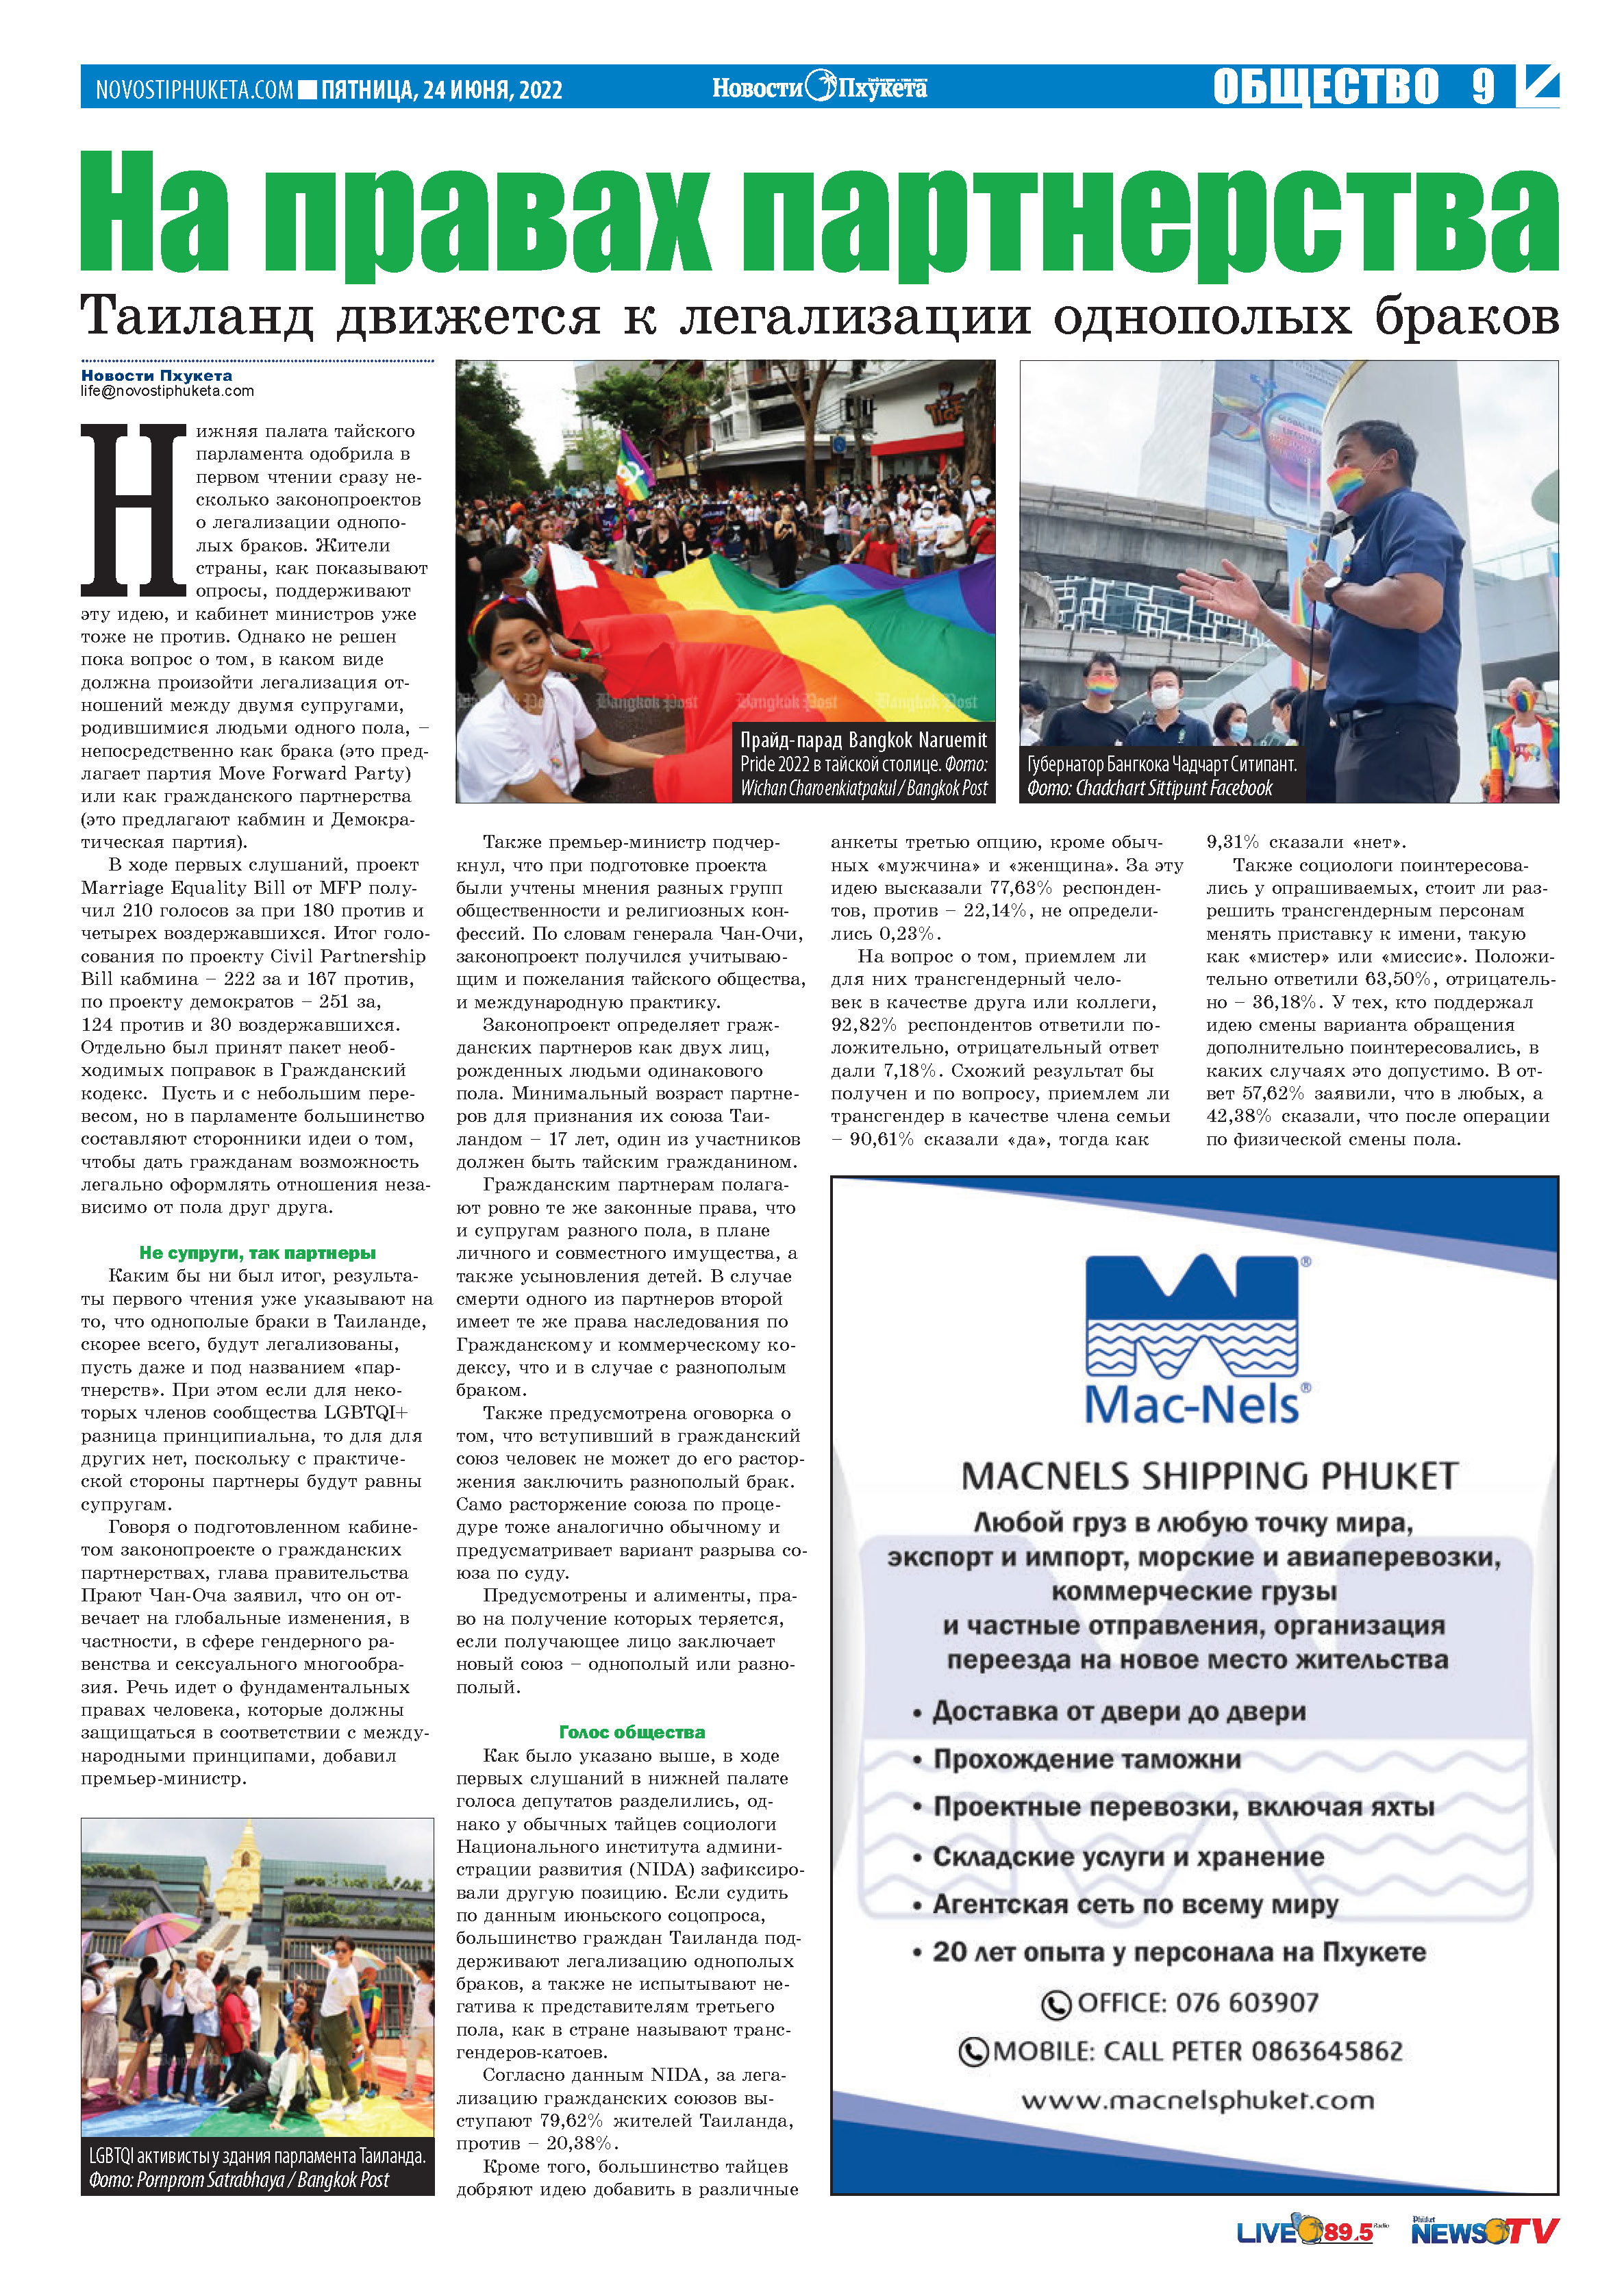 Phuket Newspaper - https://www.novostiphuketa.com/archive/24-06-2022/24-06-2022_Page_09.jpg